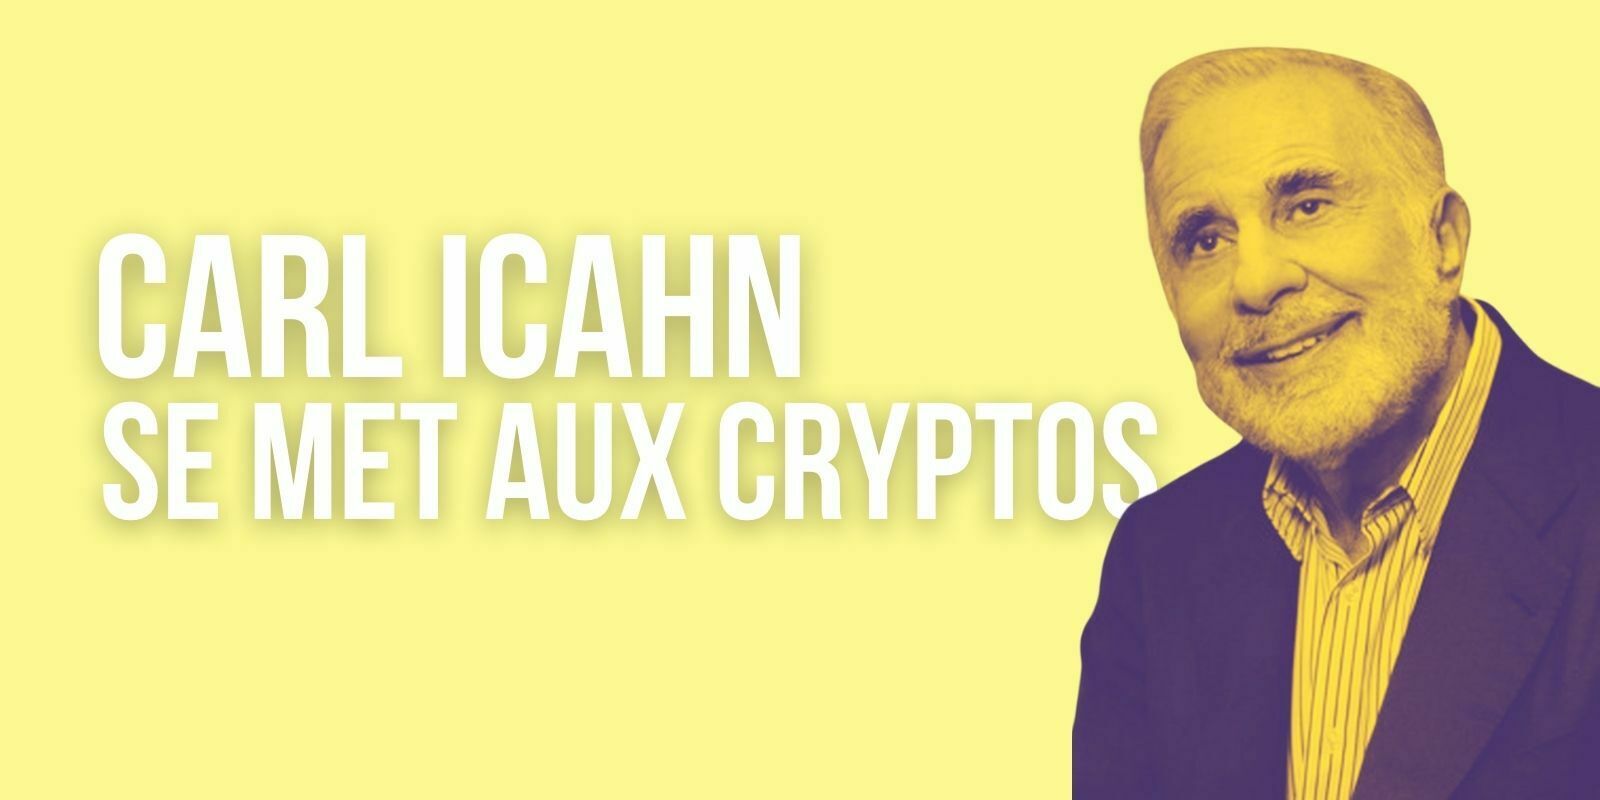 Le milliardaire Carl Icahn envisage l’achat de 1,5 milliard de dollars en cryptomonnaies